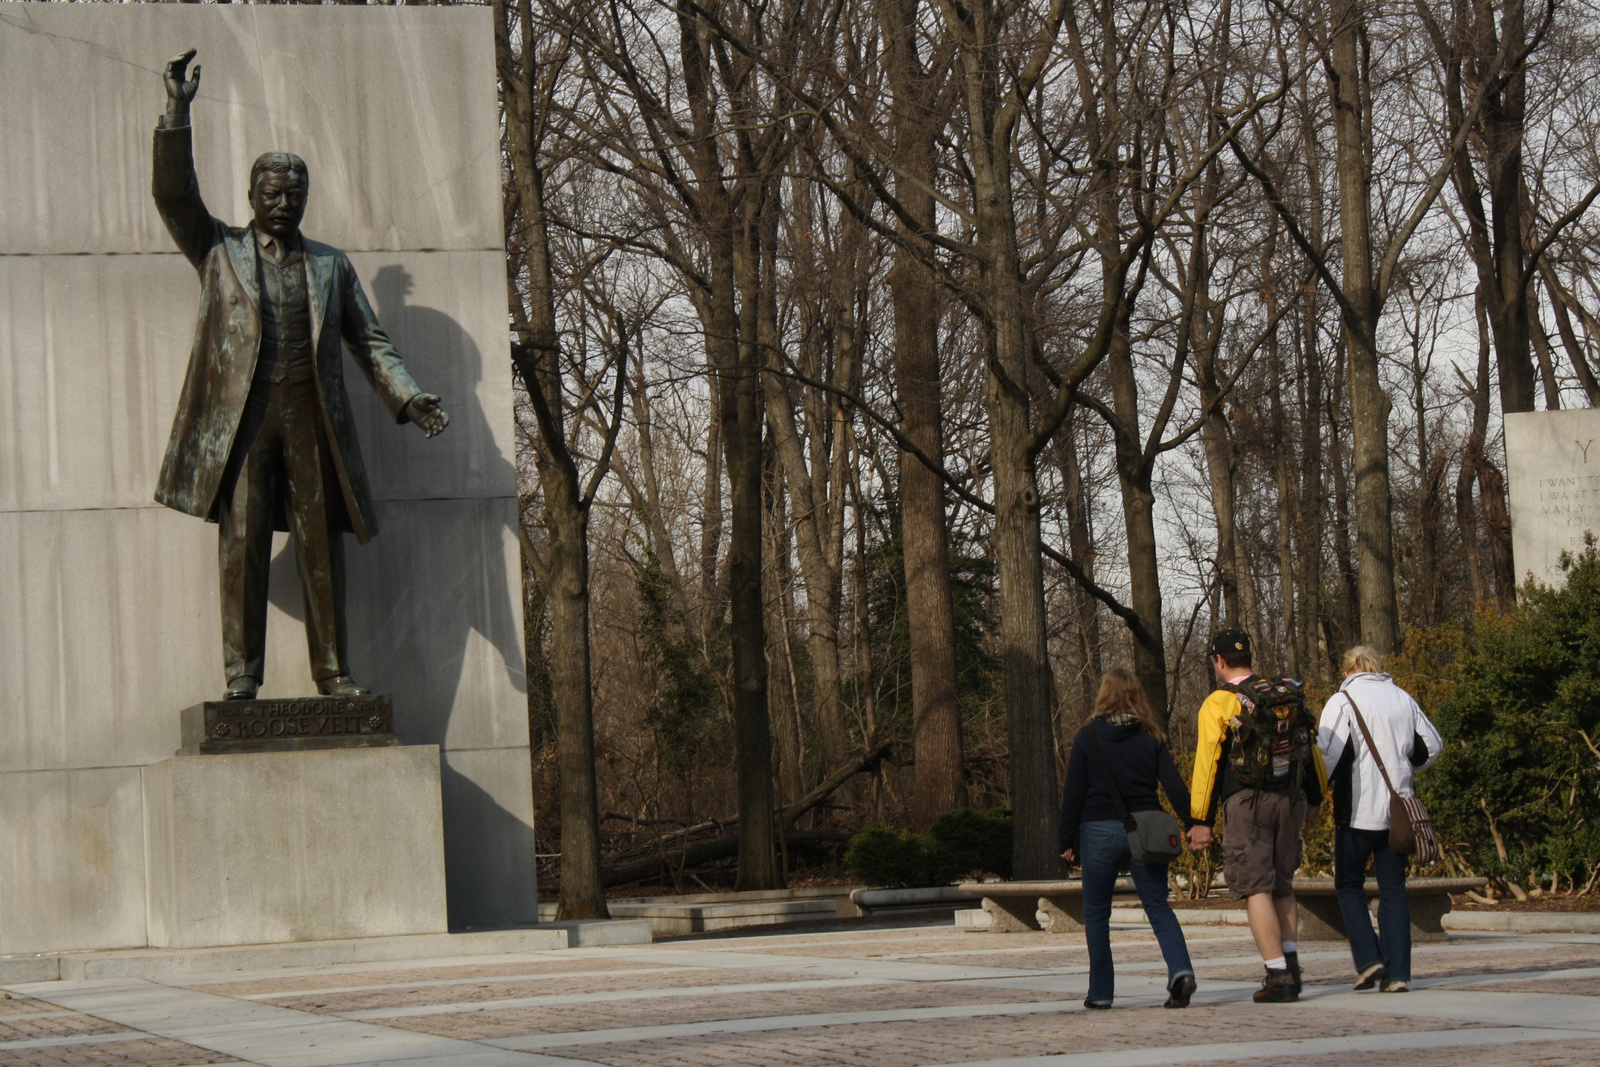 The Roosevelt Memorial